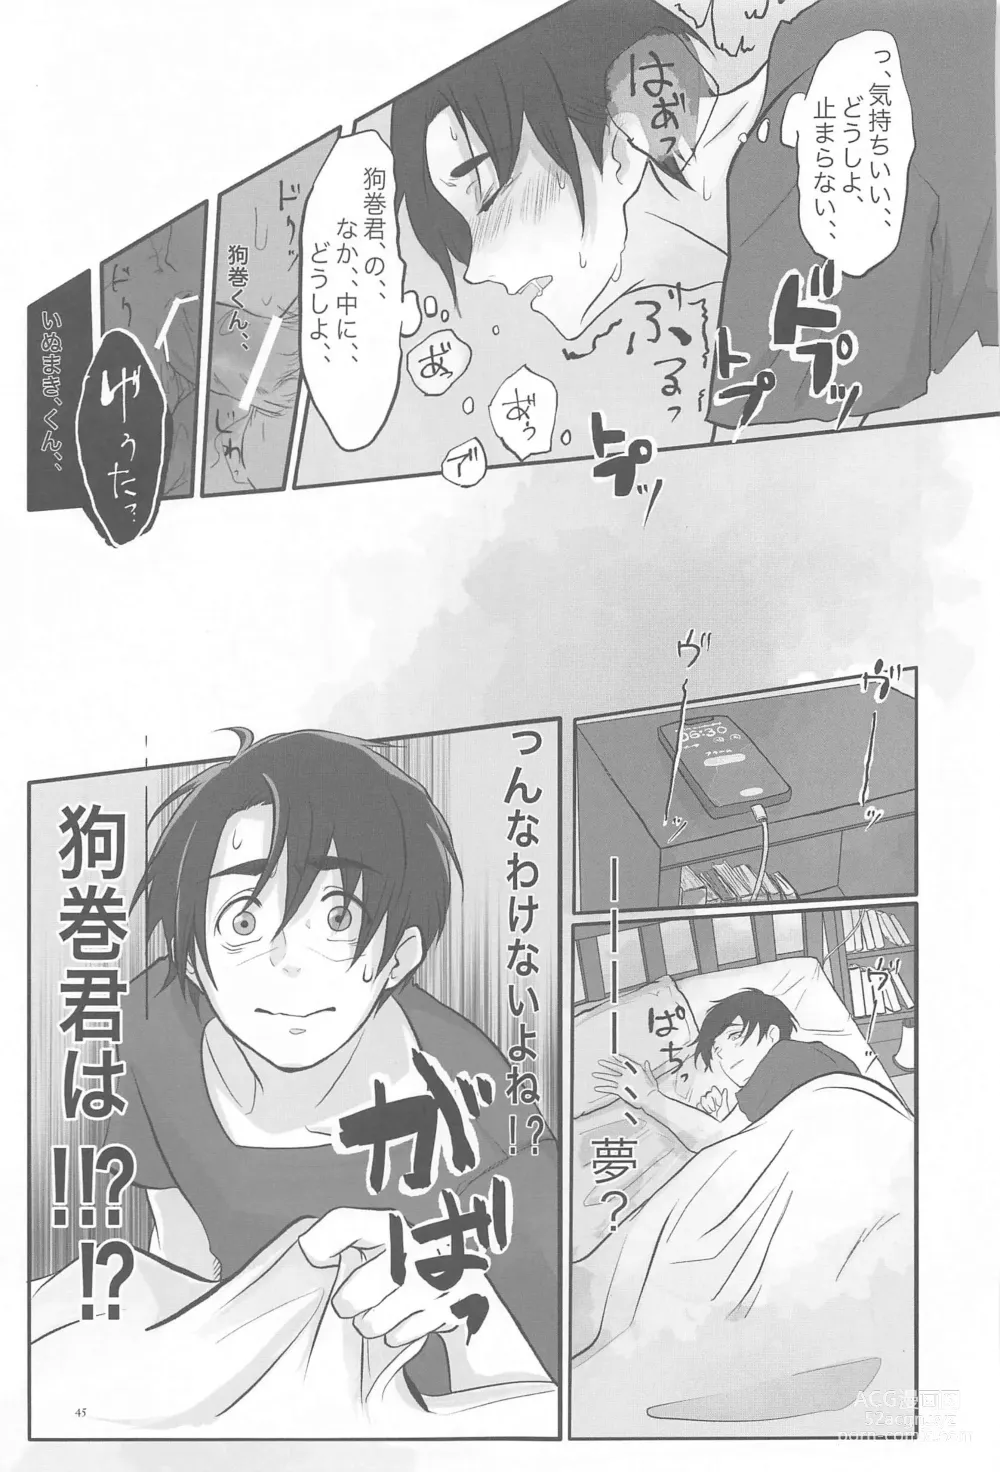 Page 44 of doujinshi Mainichi Mainichi Yume ni Miruhodo